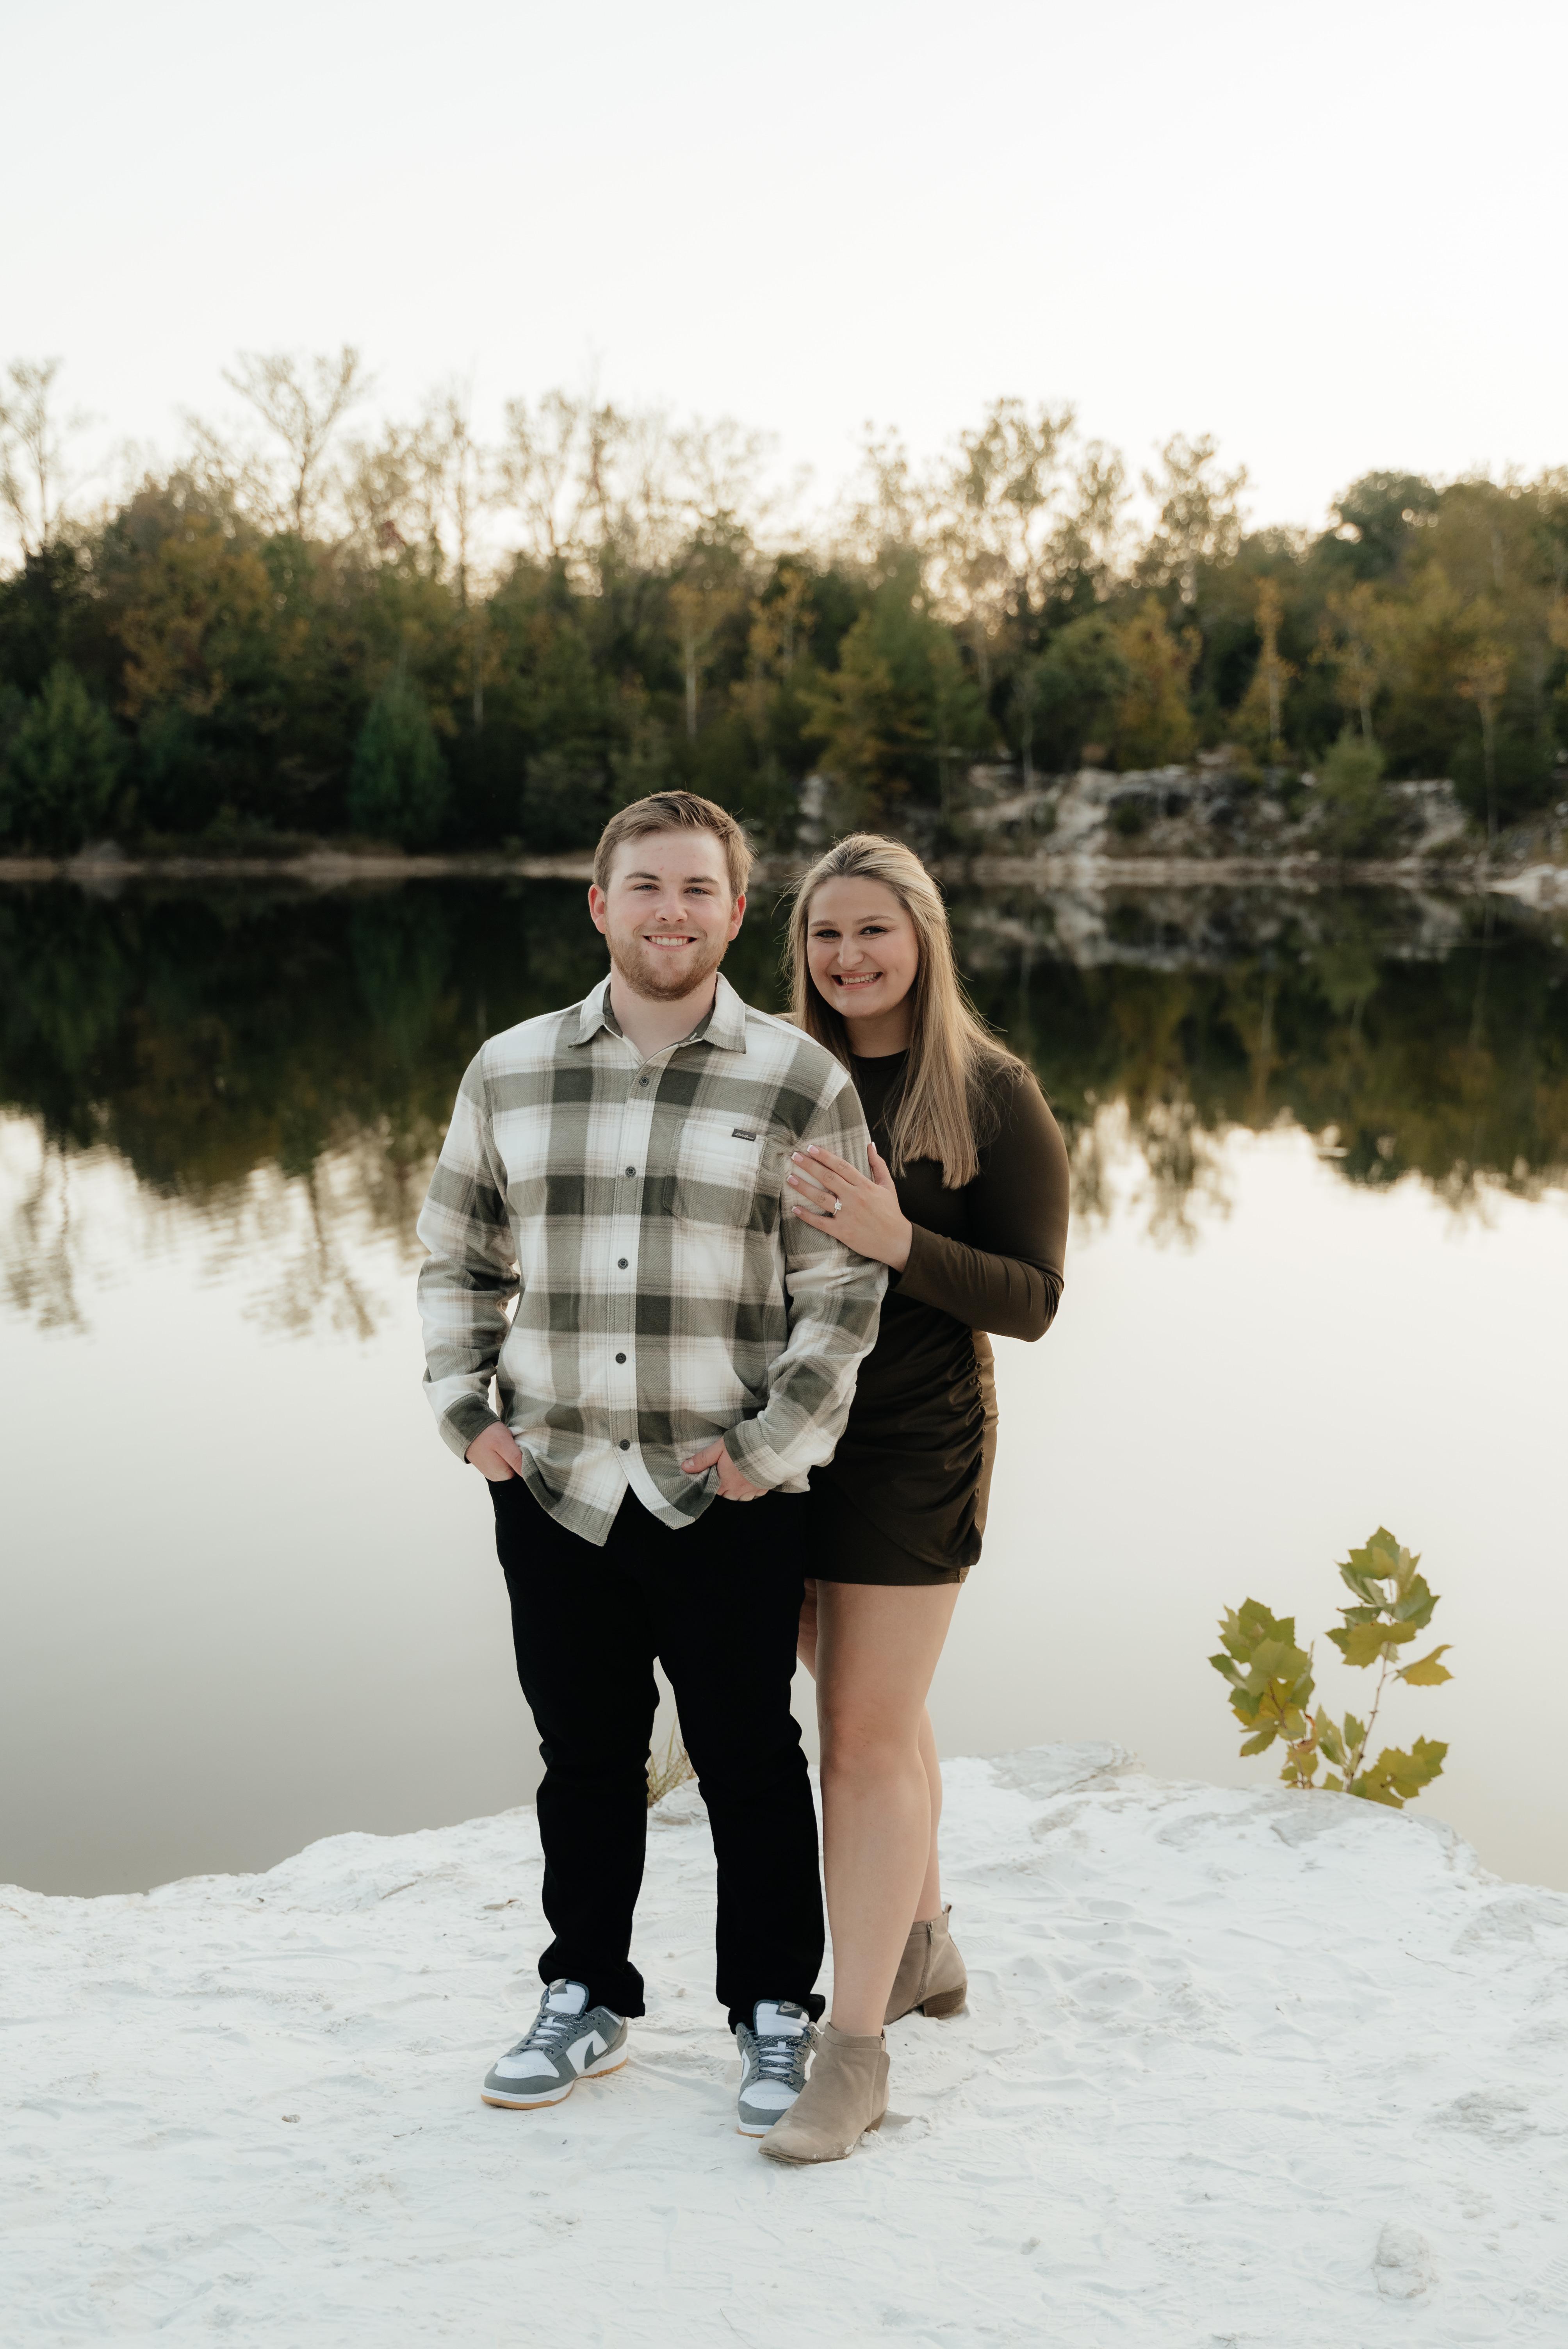 The Wedding Website of Logan Lingle and Brooke Wilson